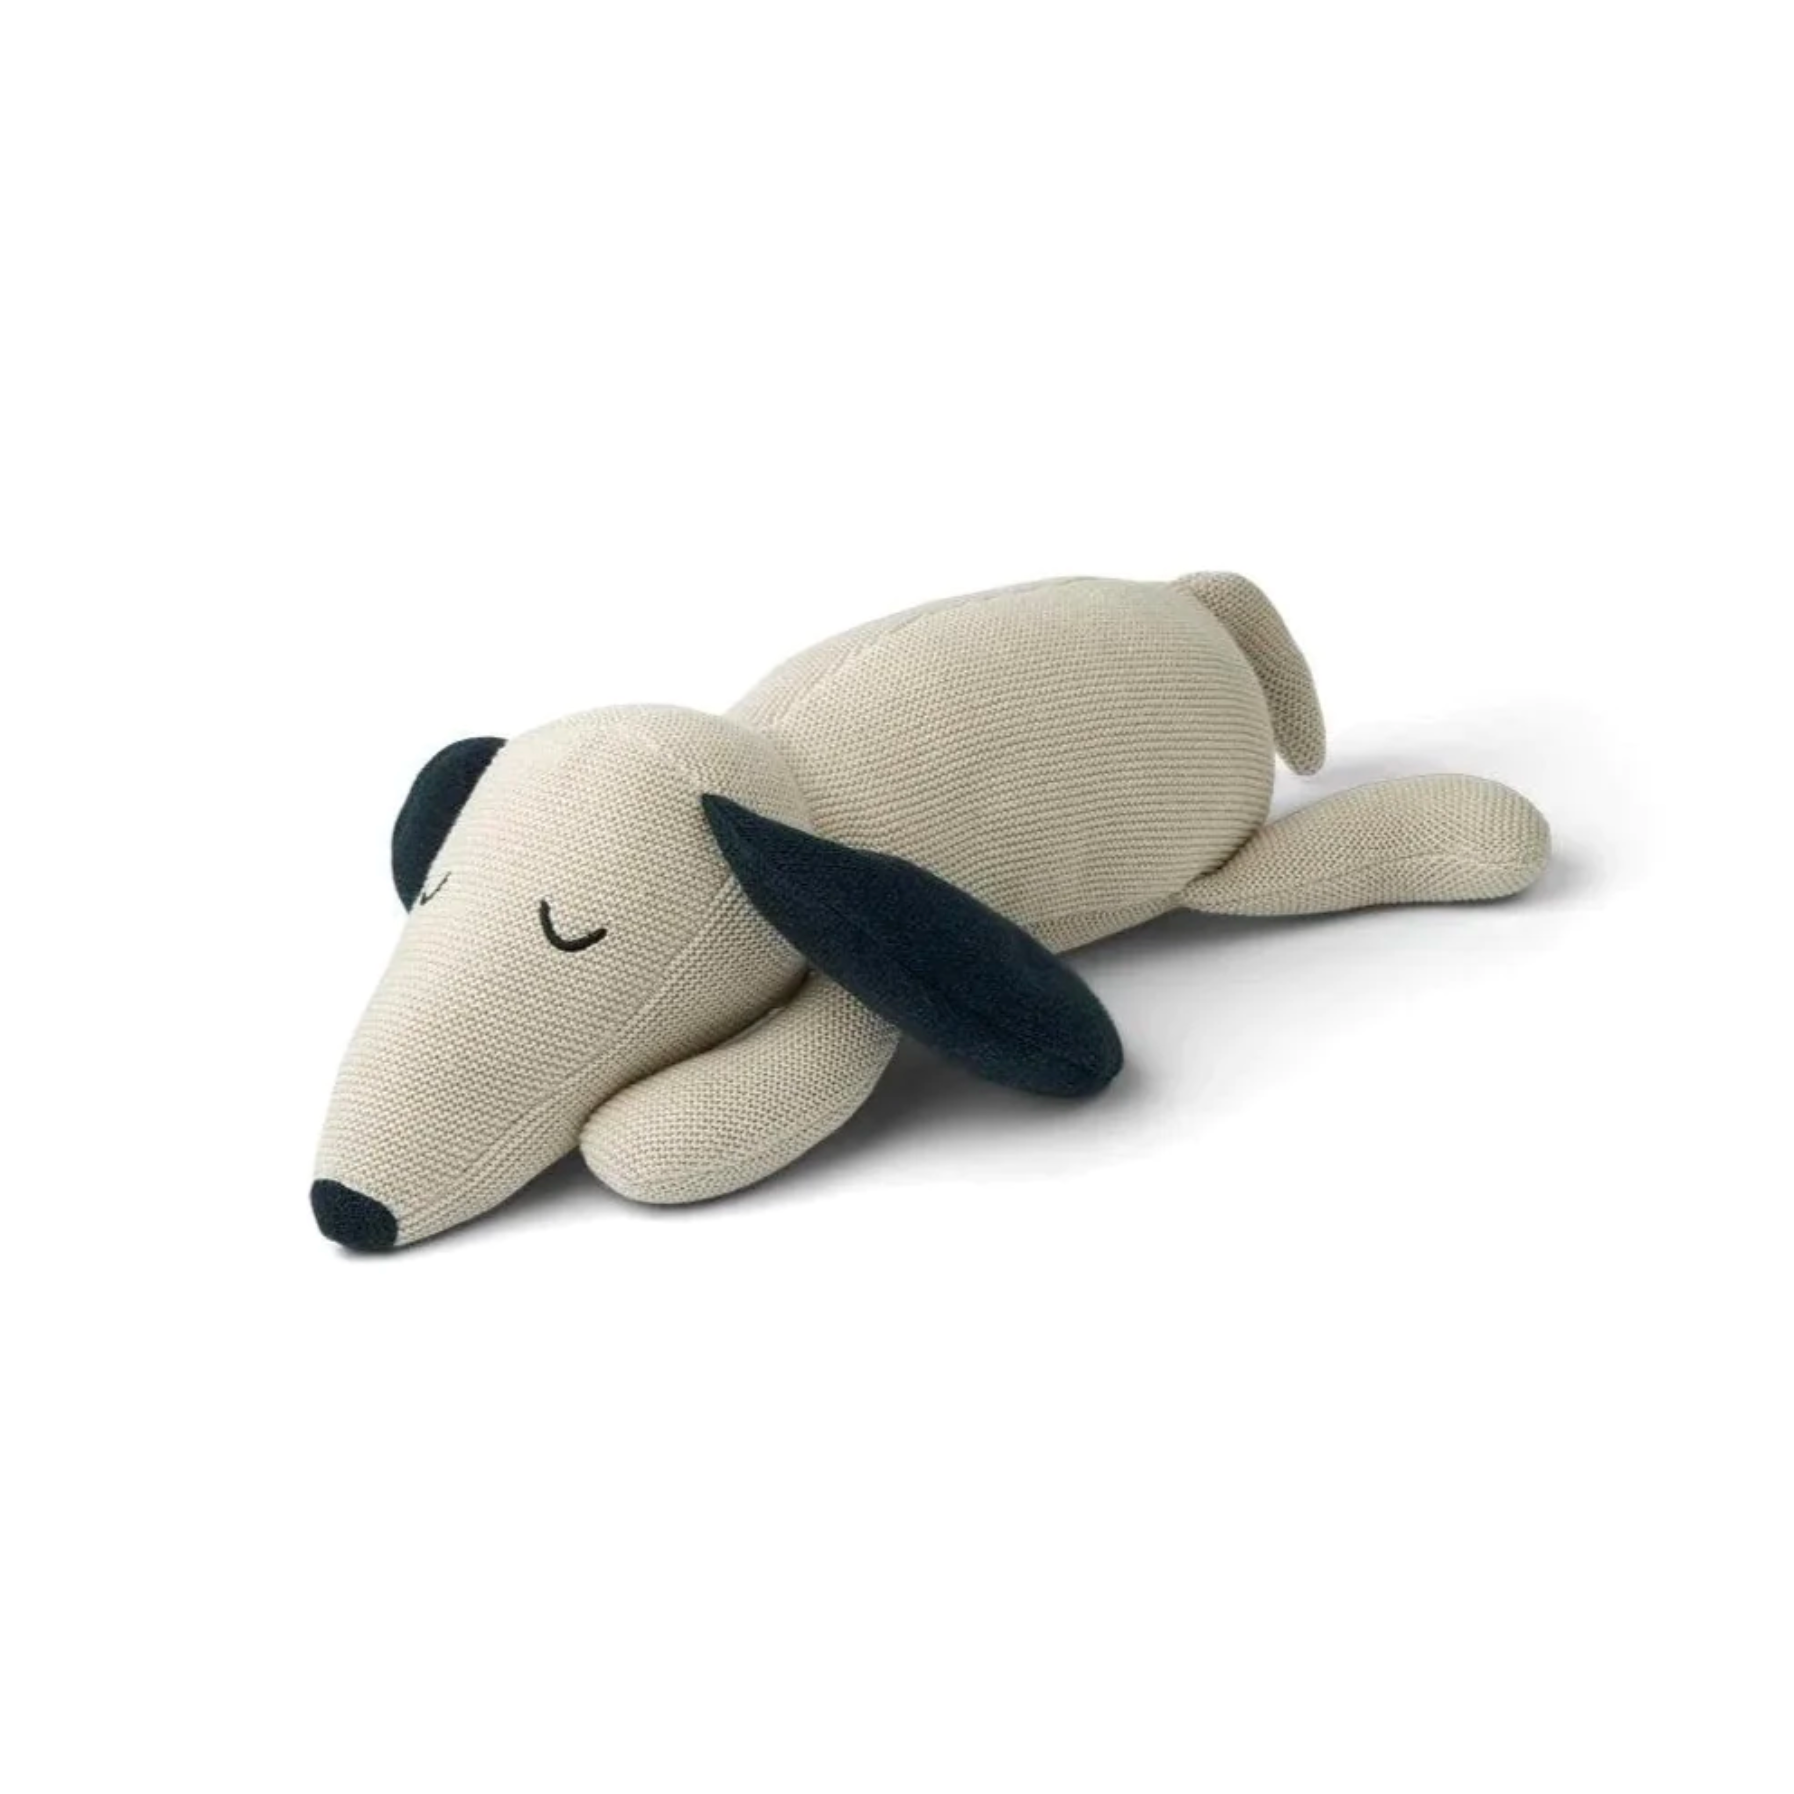 LIEWOOD - Dog soft toy